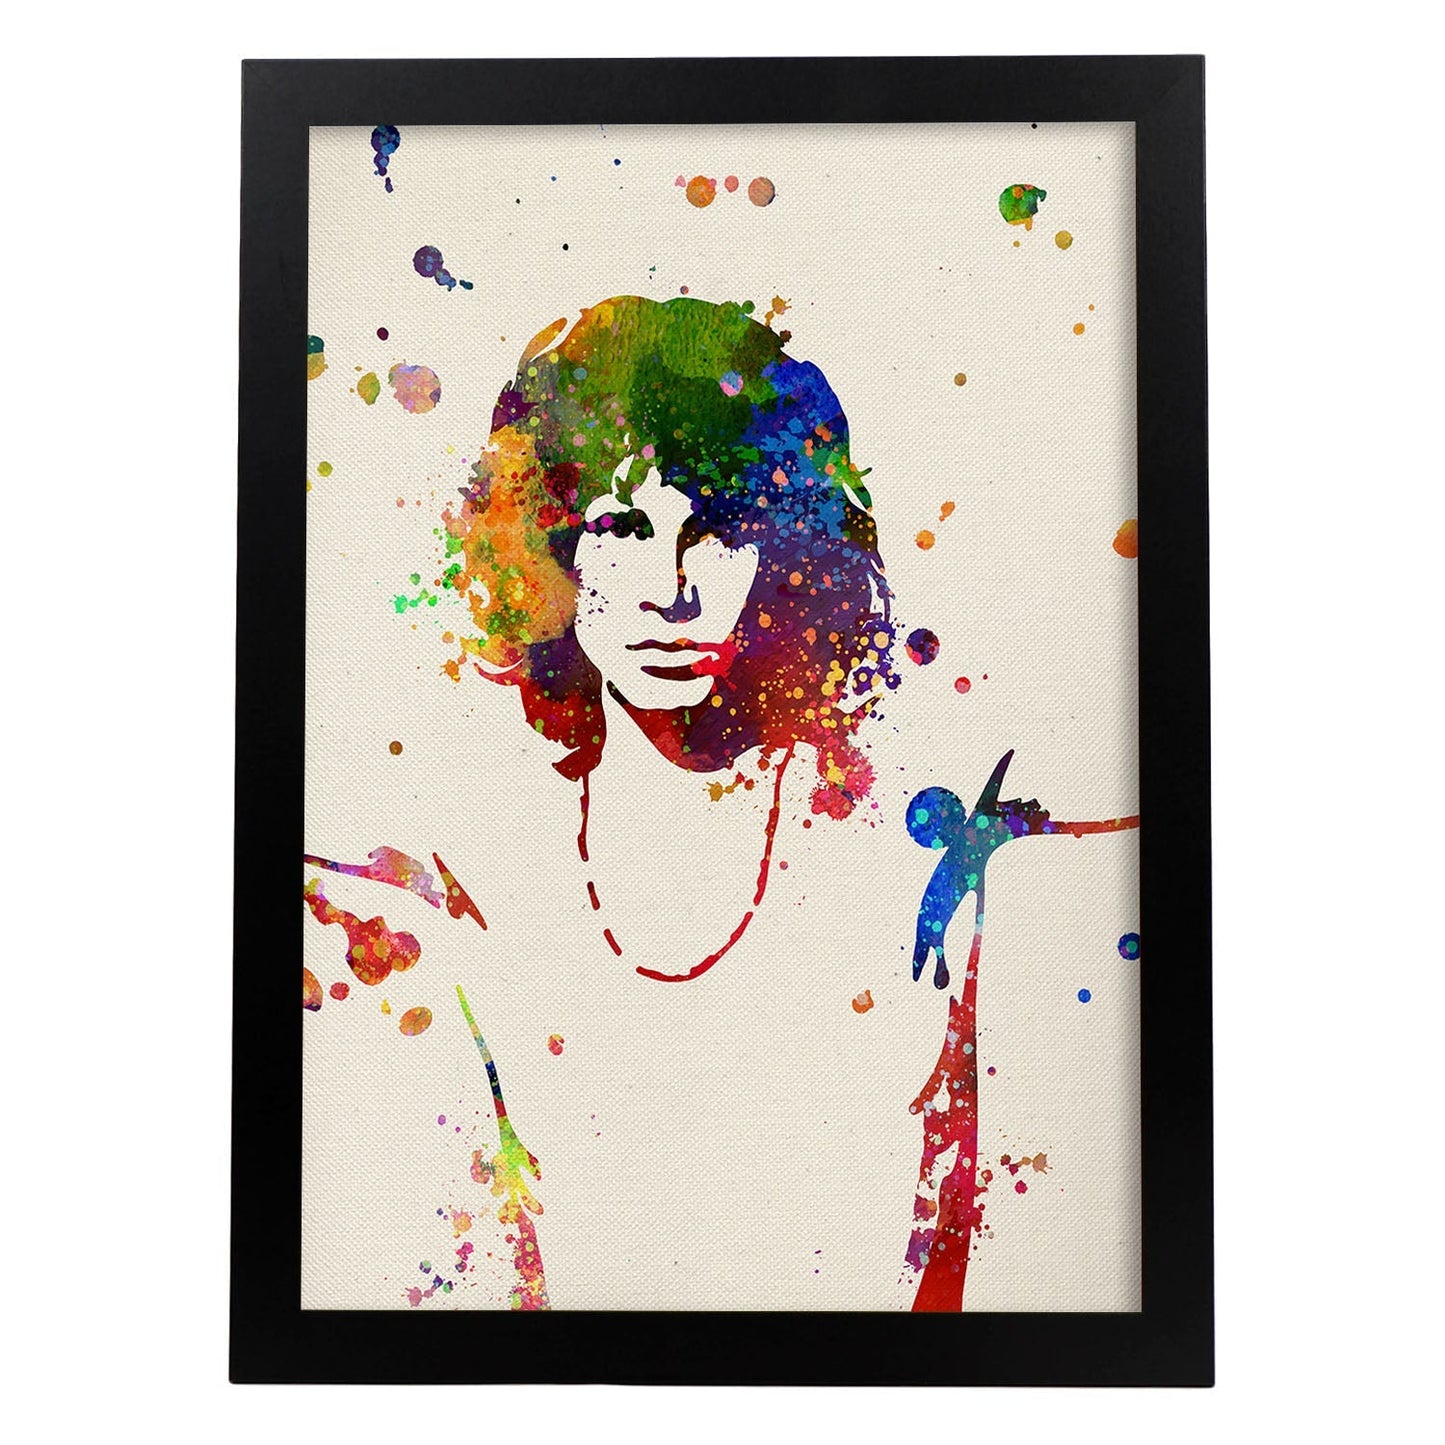 Poster imagen de Jim Morrison. Posters con diseño acuarela de famosos, actores, músicos-Artwork-Nacnic-A4-Marco Negro-Nacnic Estudio SL